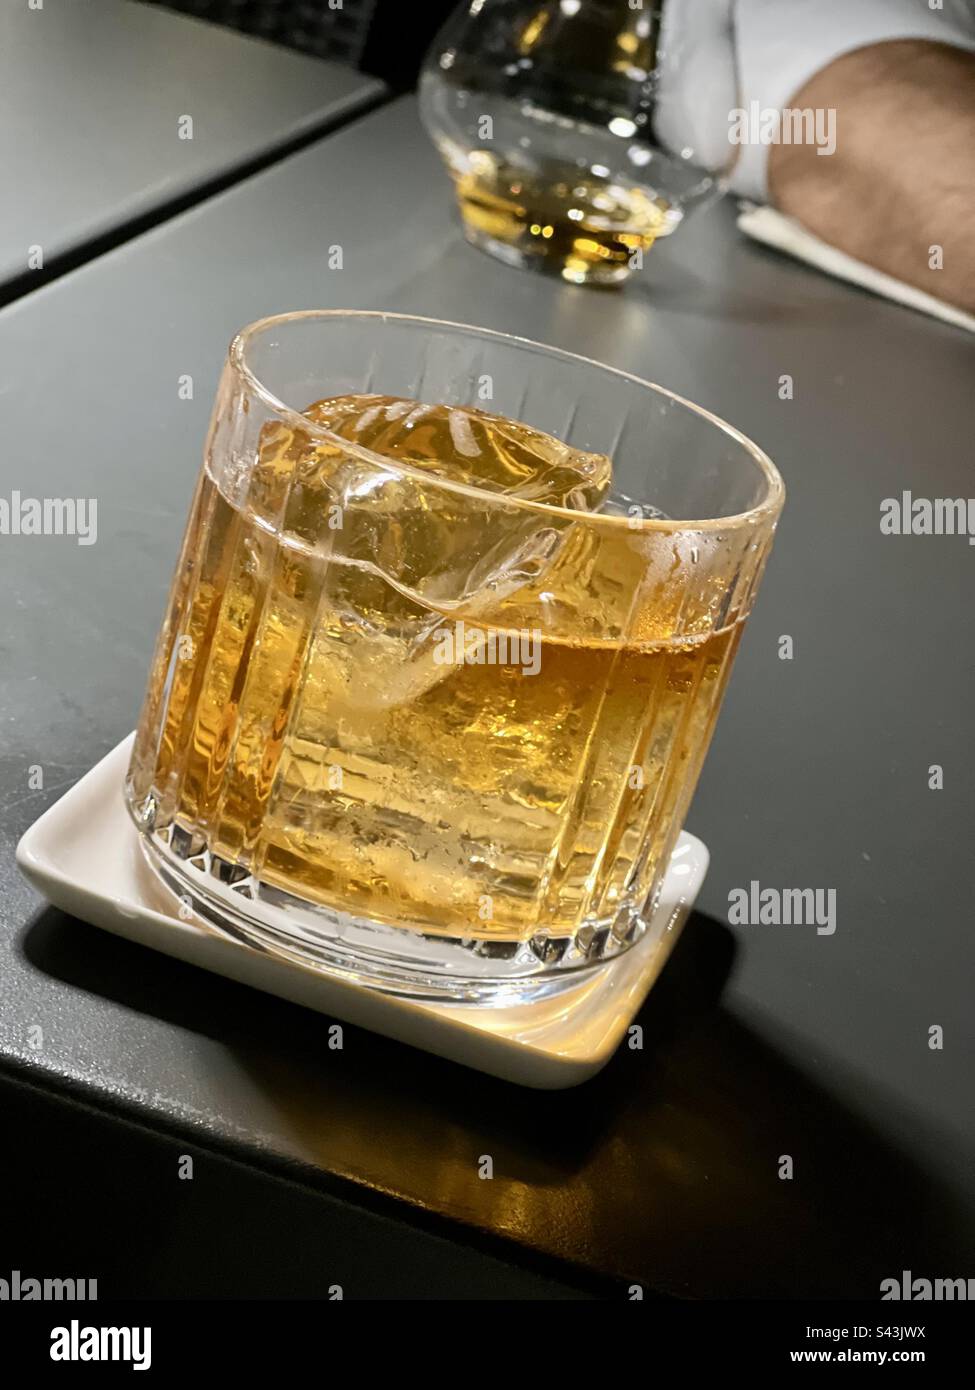 https://c8.alamy.com/comp/S43JWX/old-fashioned-cocktail-S43JWX.jpg